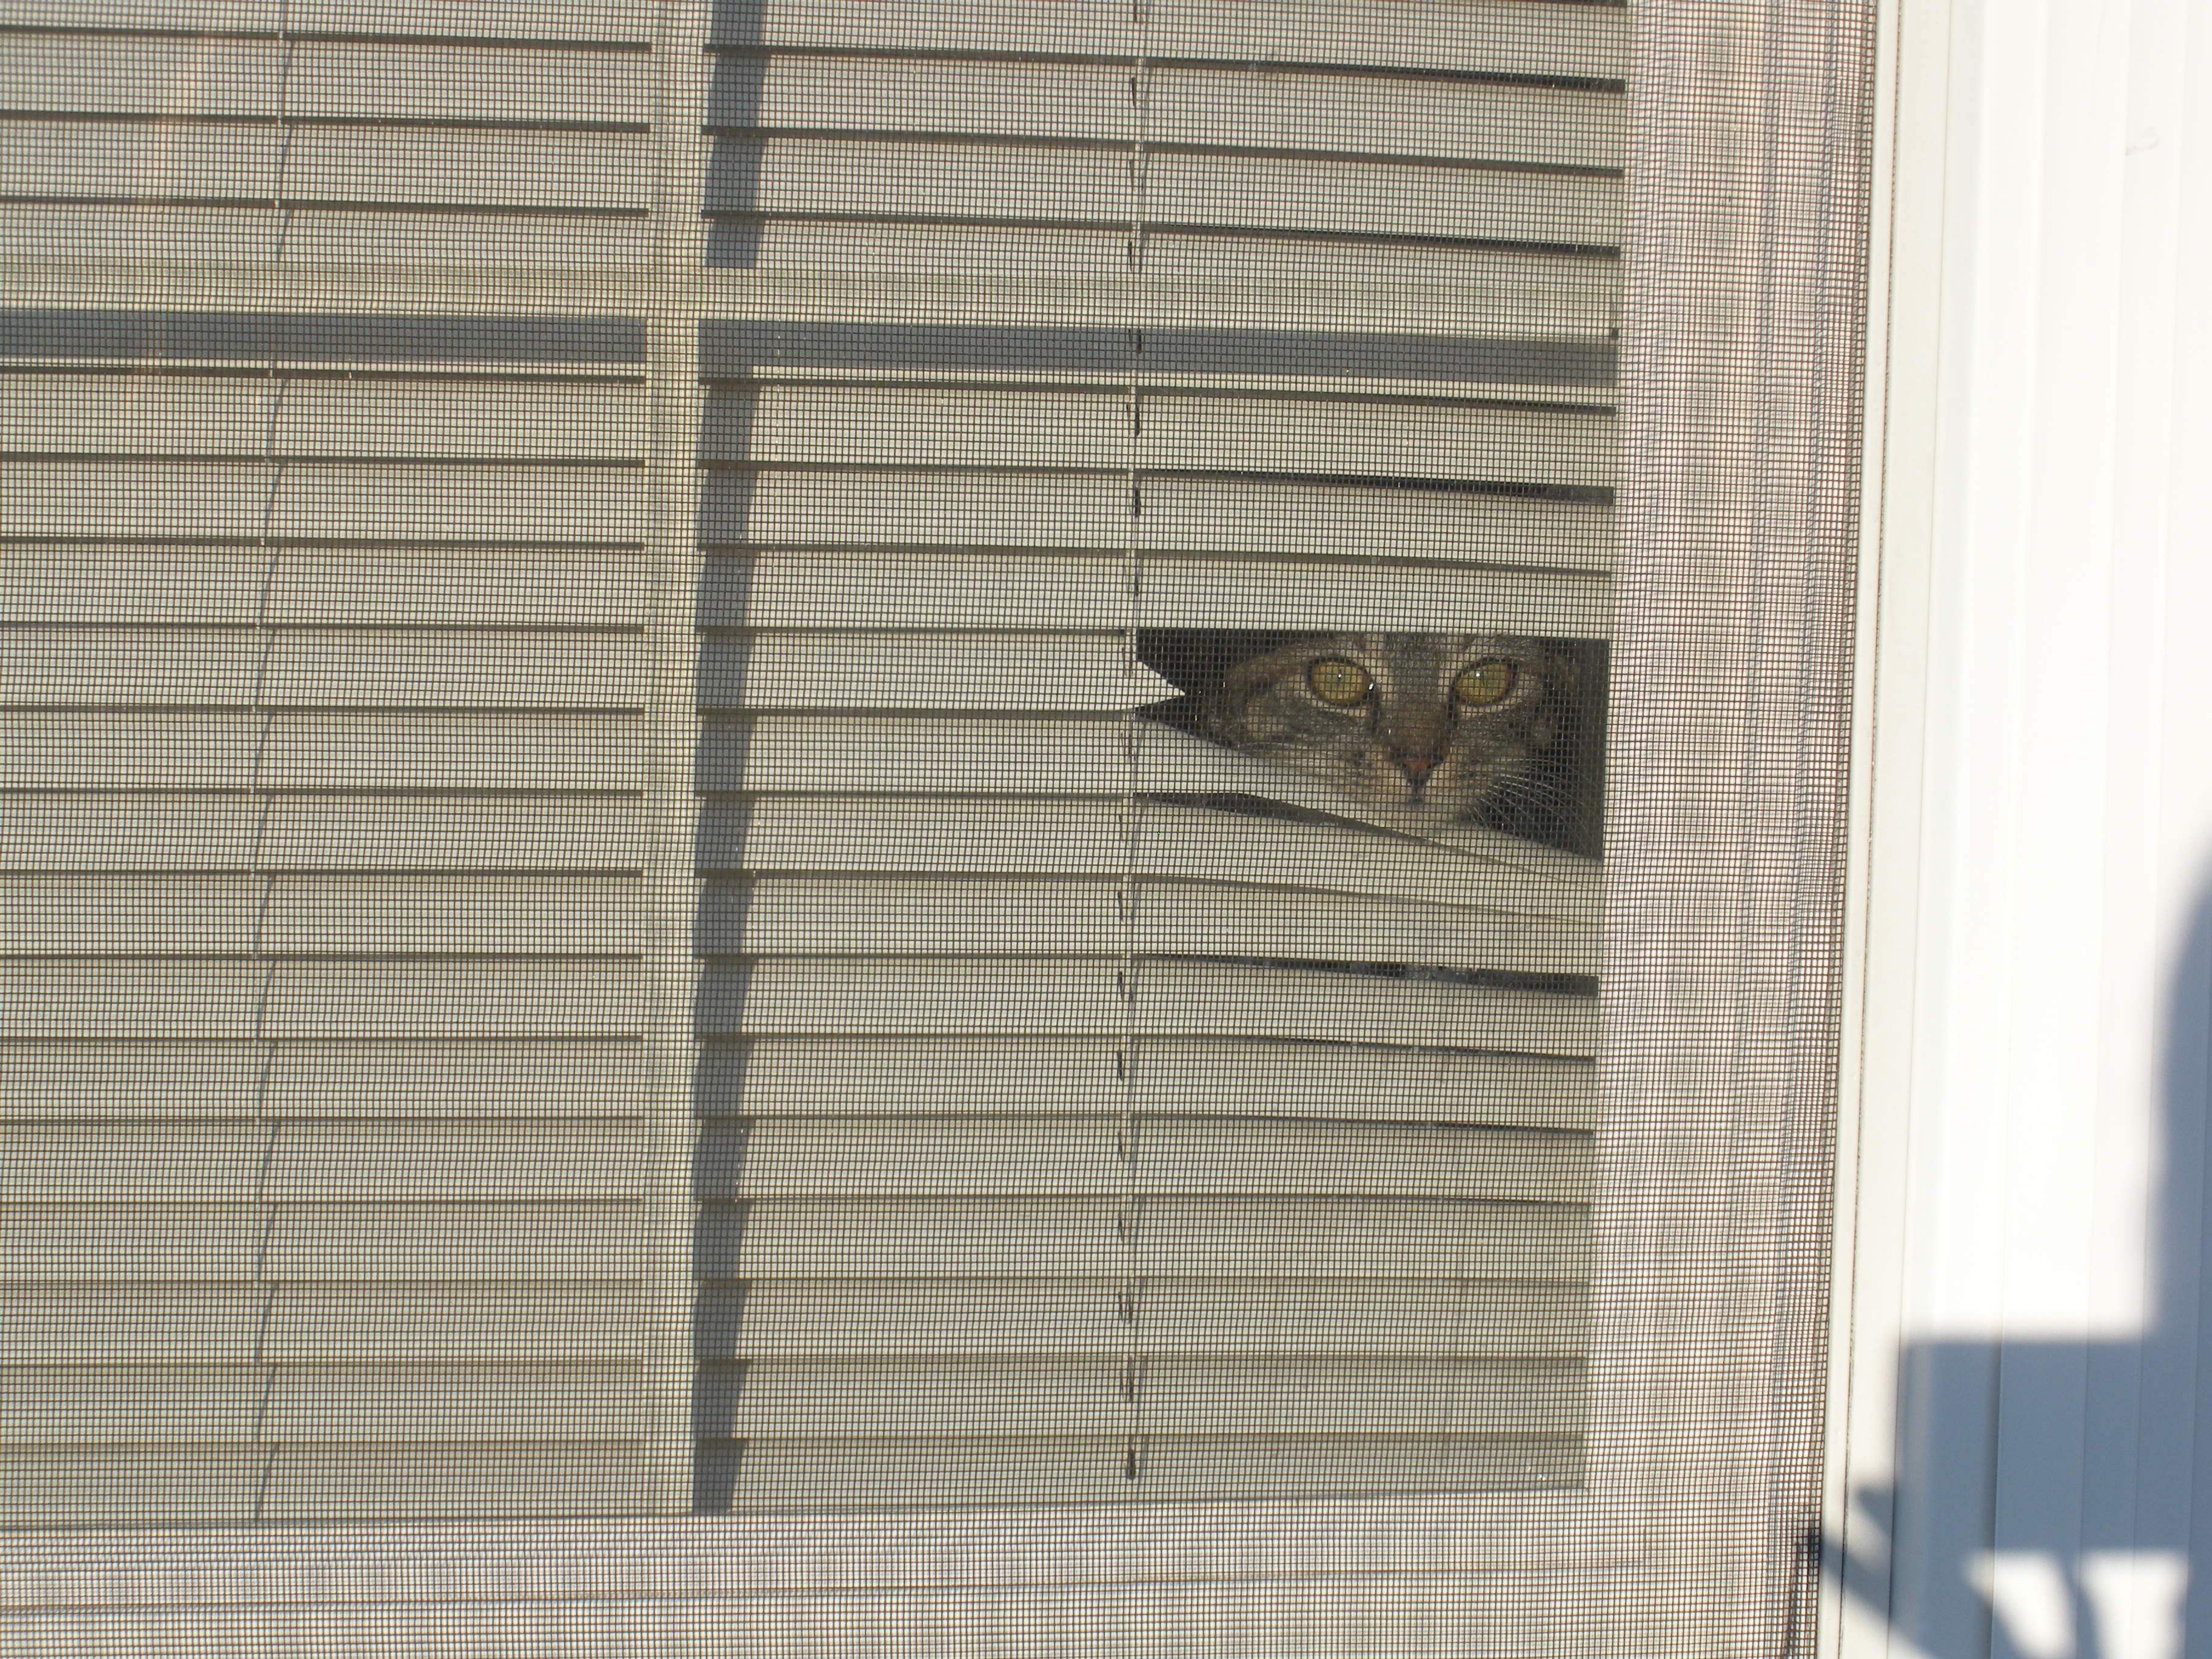 cat-peeking-out-of-blinds.jpg